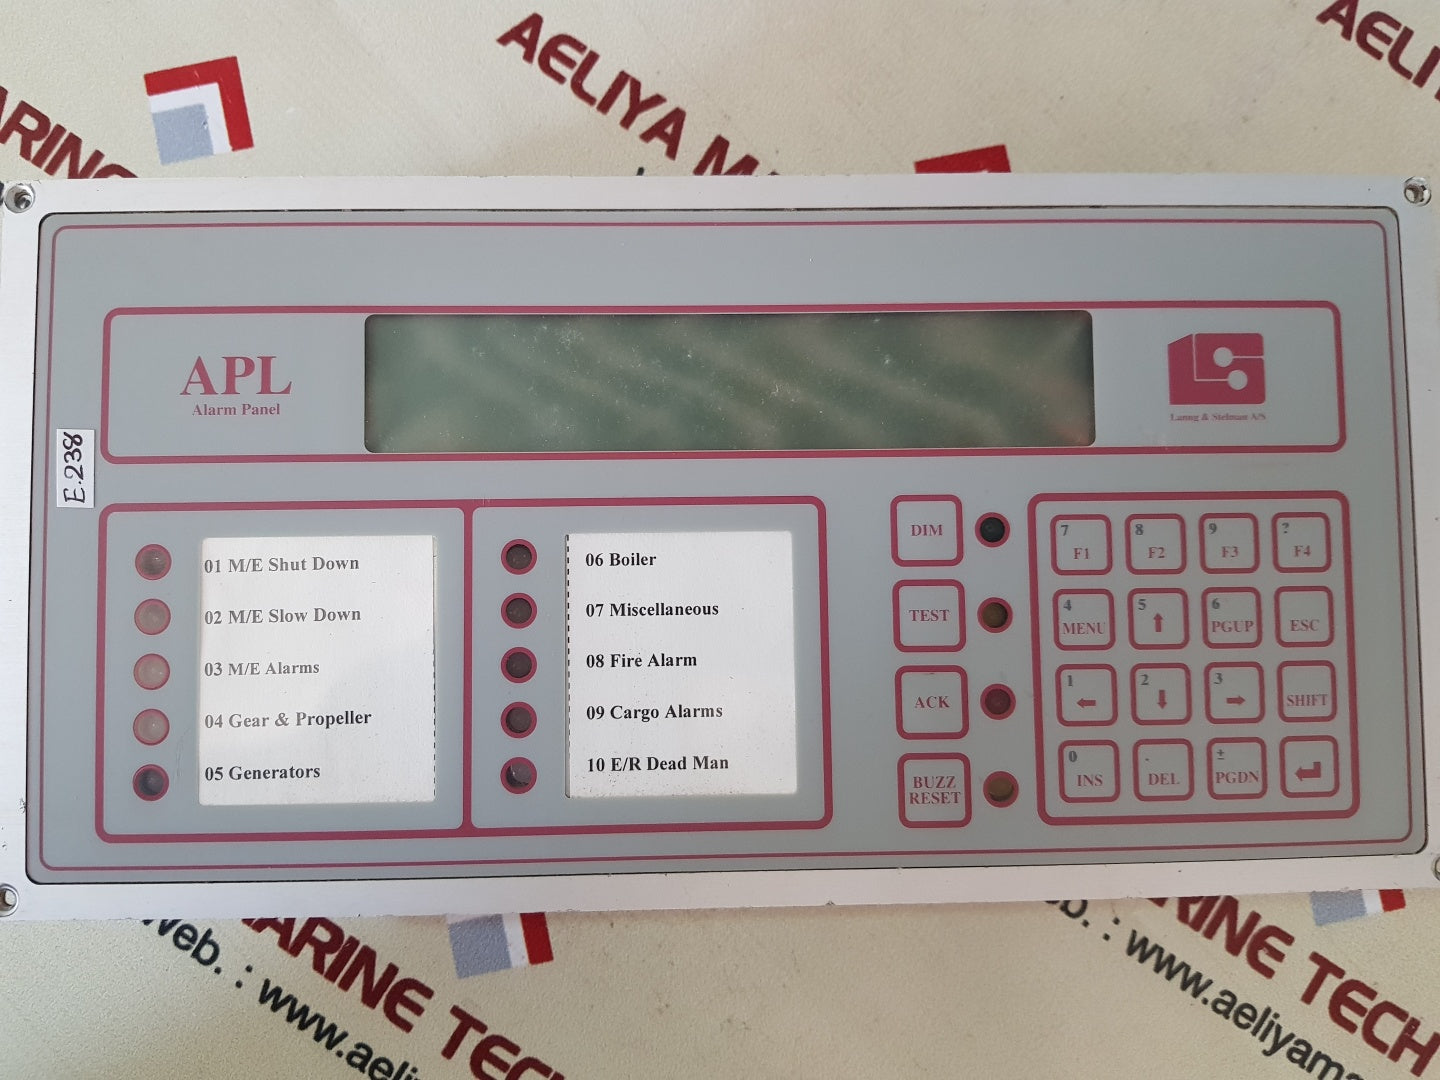 Apl 1284-002 alarm panel